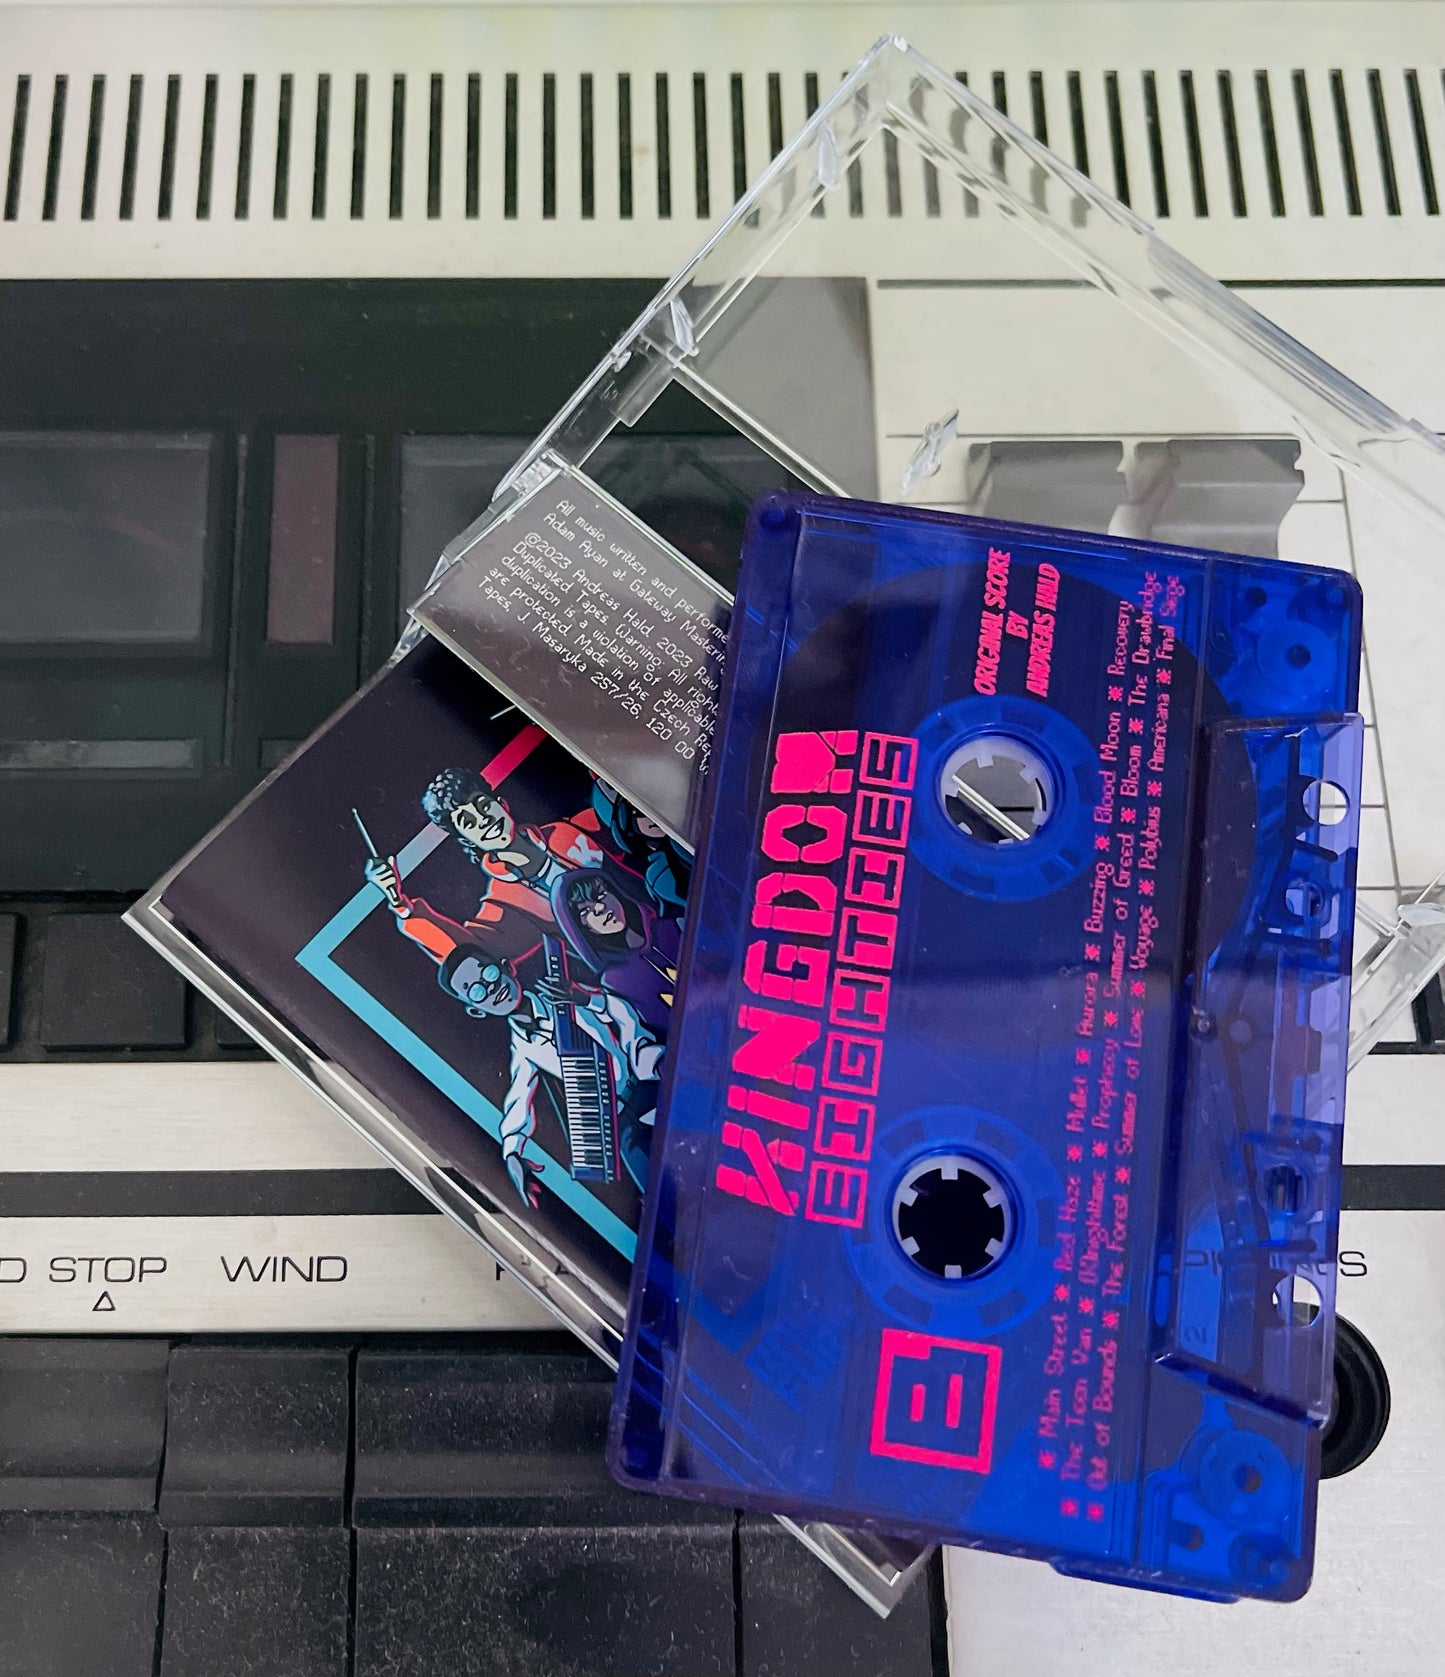 Kingdom Eighties cassette tape